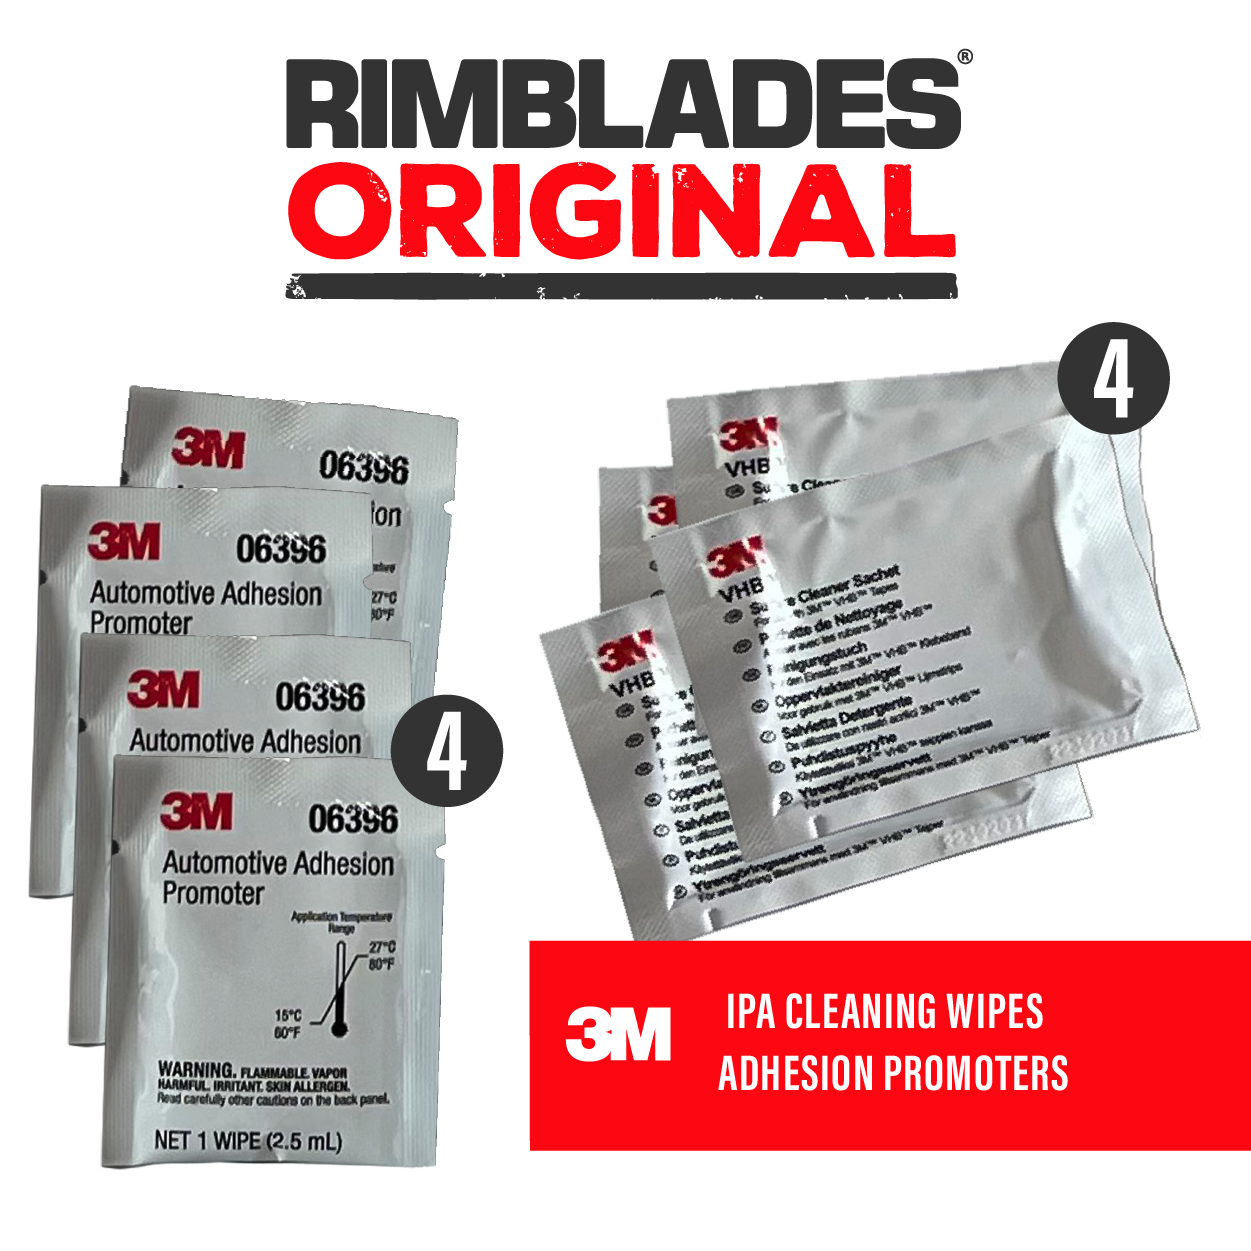 RIMBLADES Ultra Felgenschutz Felgenringe Rim Protector & Styling